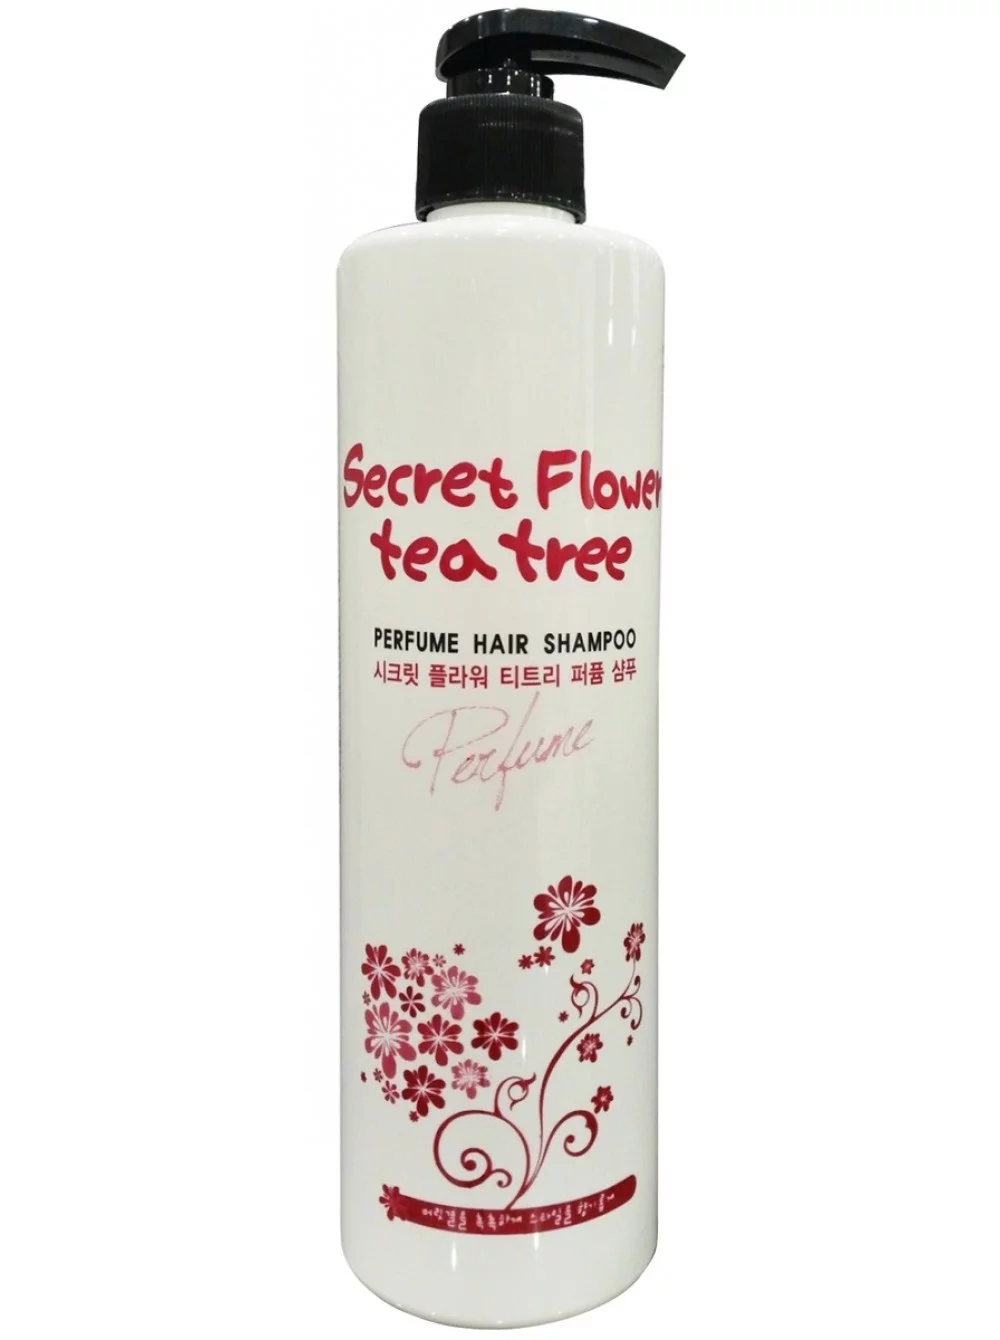 Secret Flower Tea Tree Perfume Shampoo в интернет-магазине Skinly